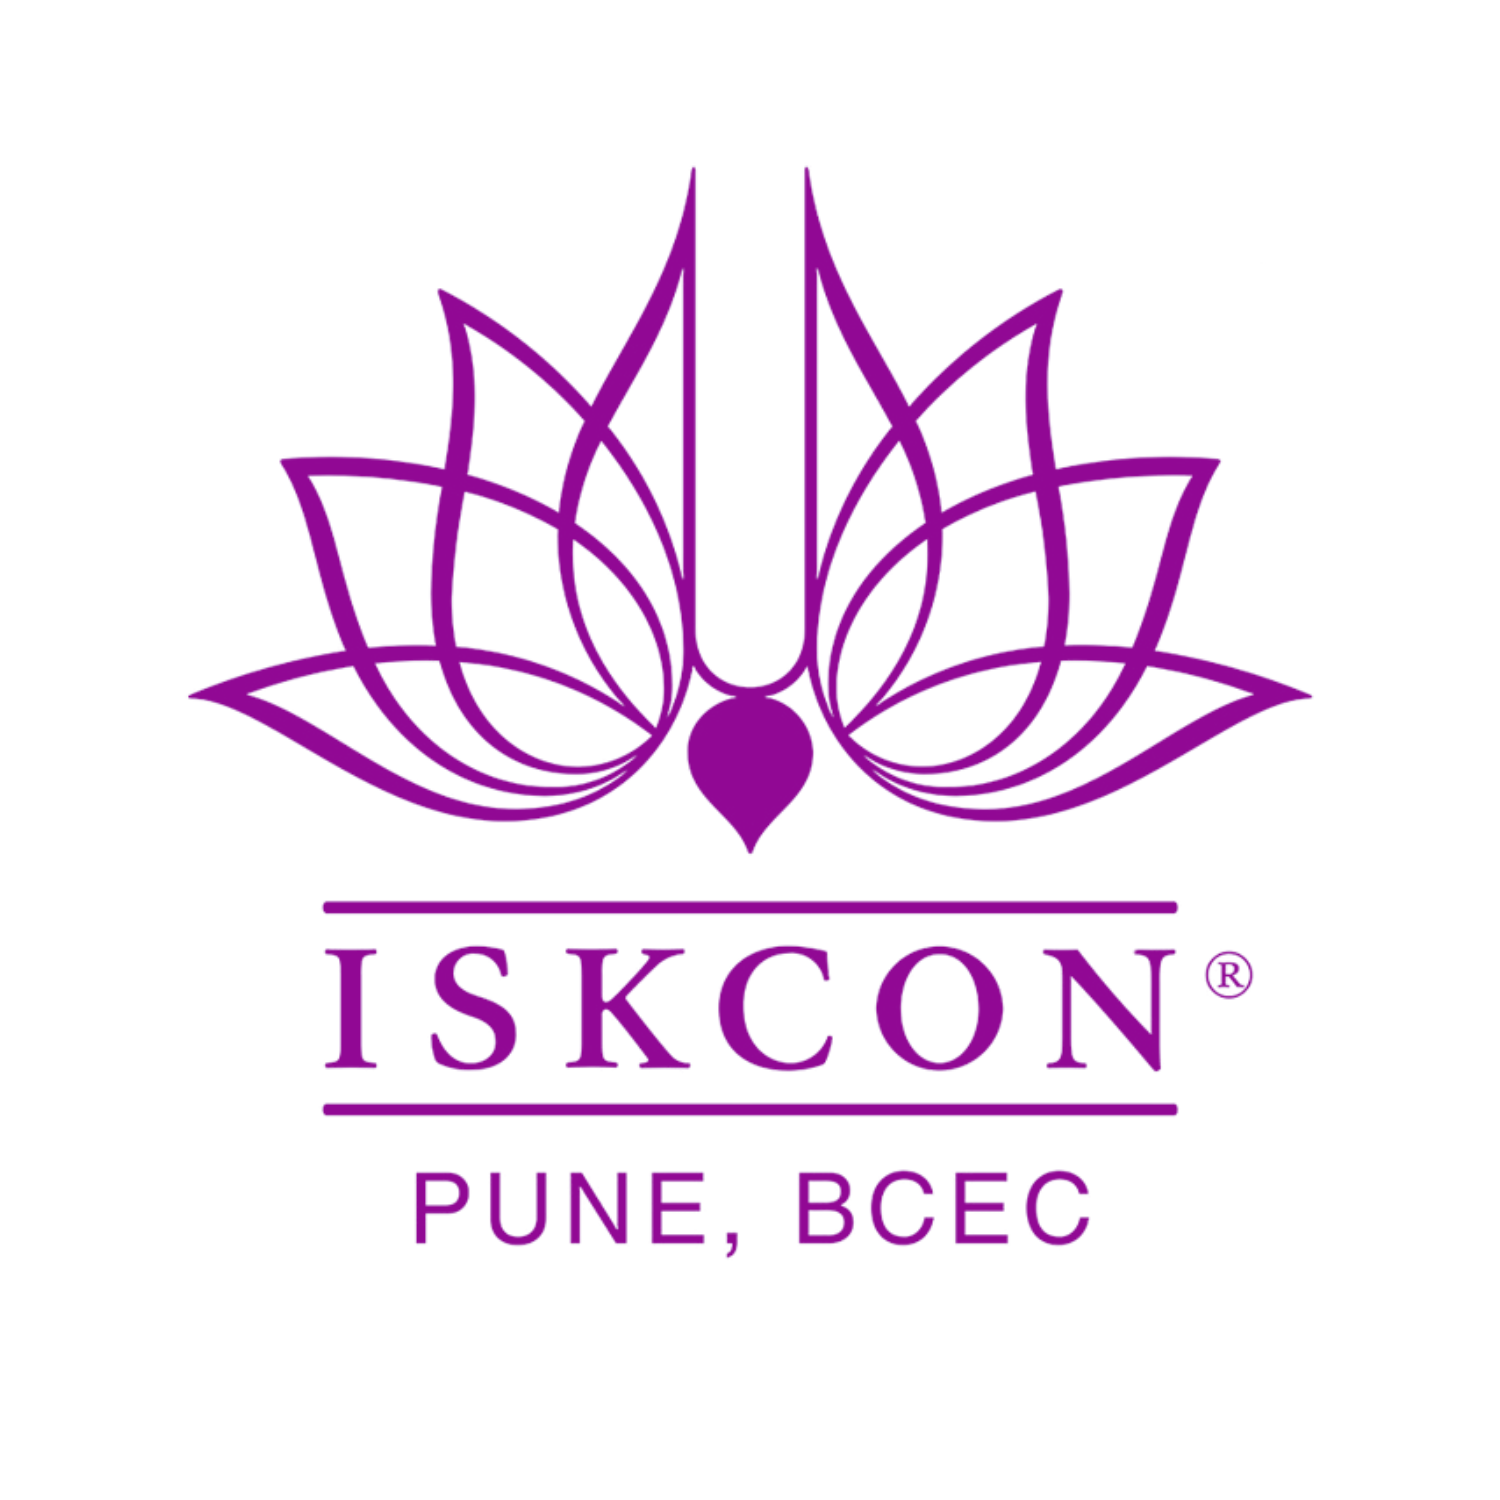 The Original ISKCON added a new photo. - The Original ISKCON